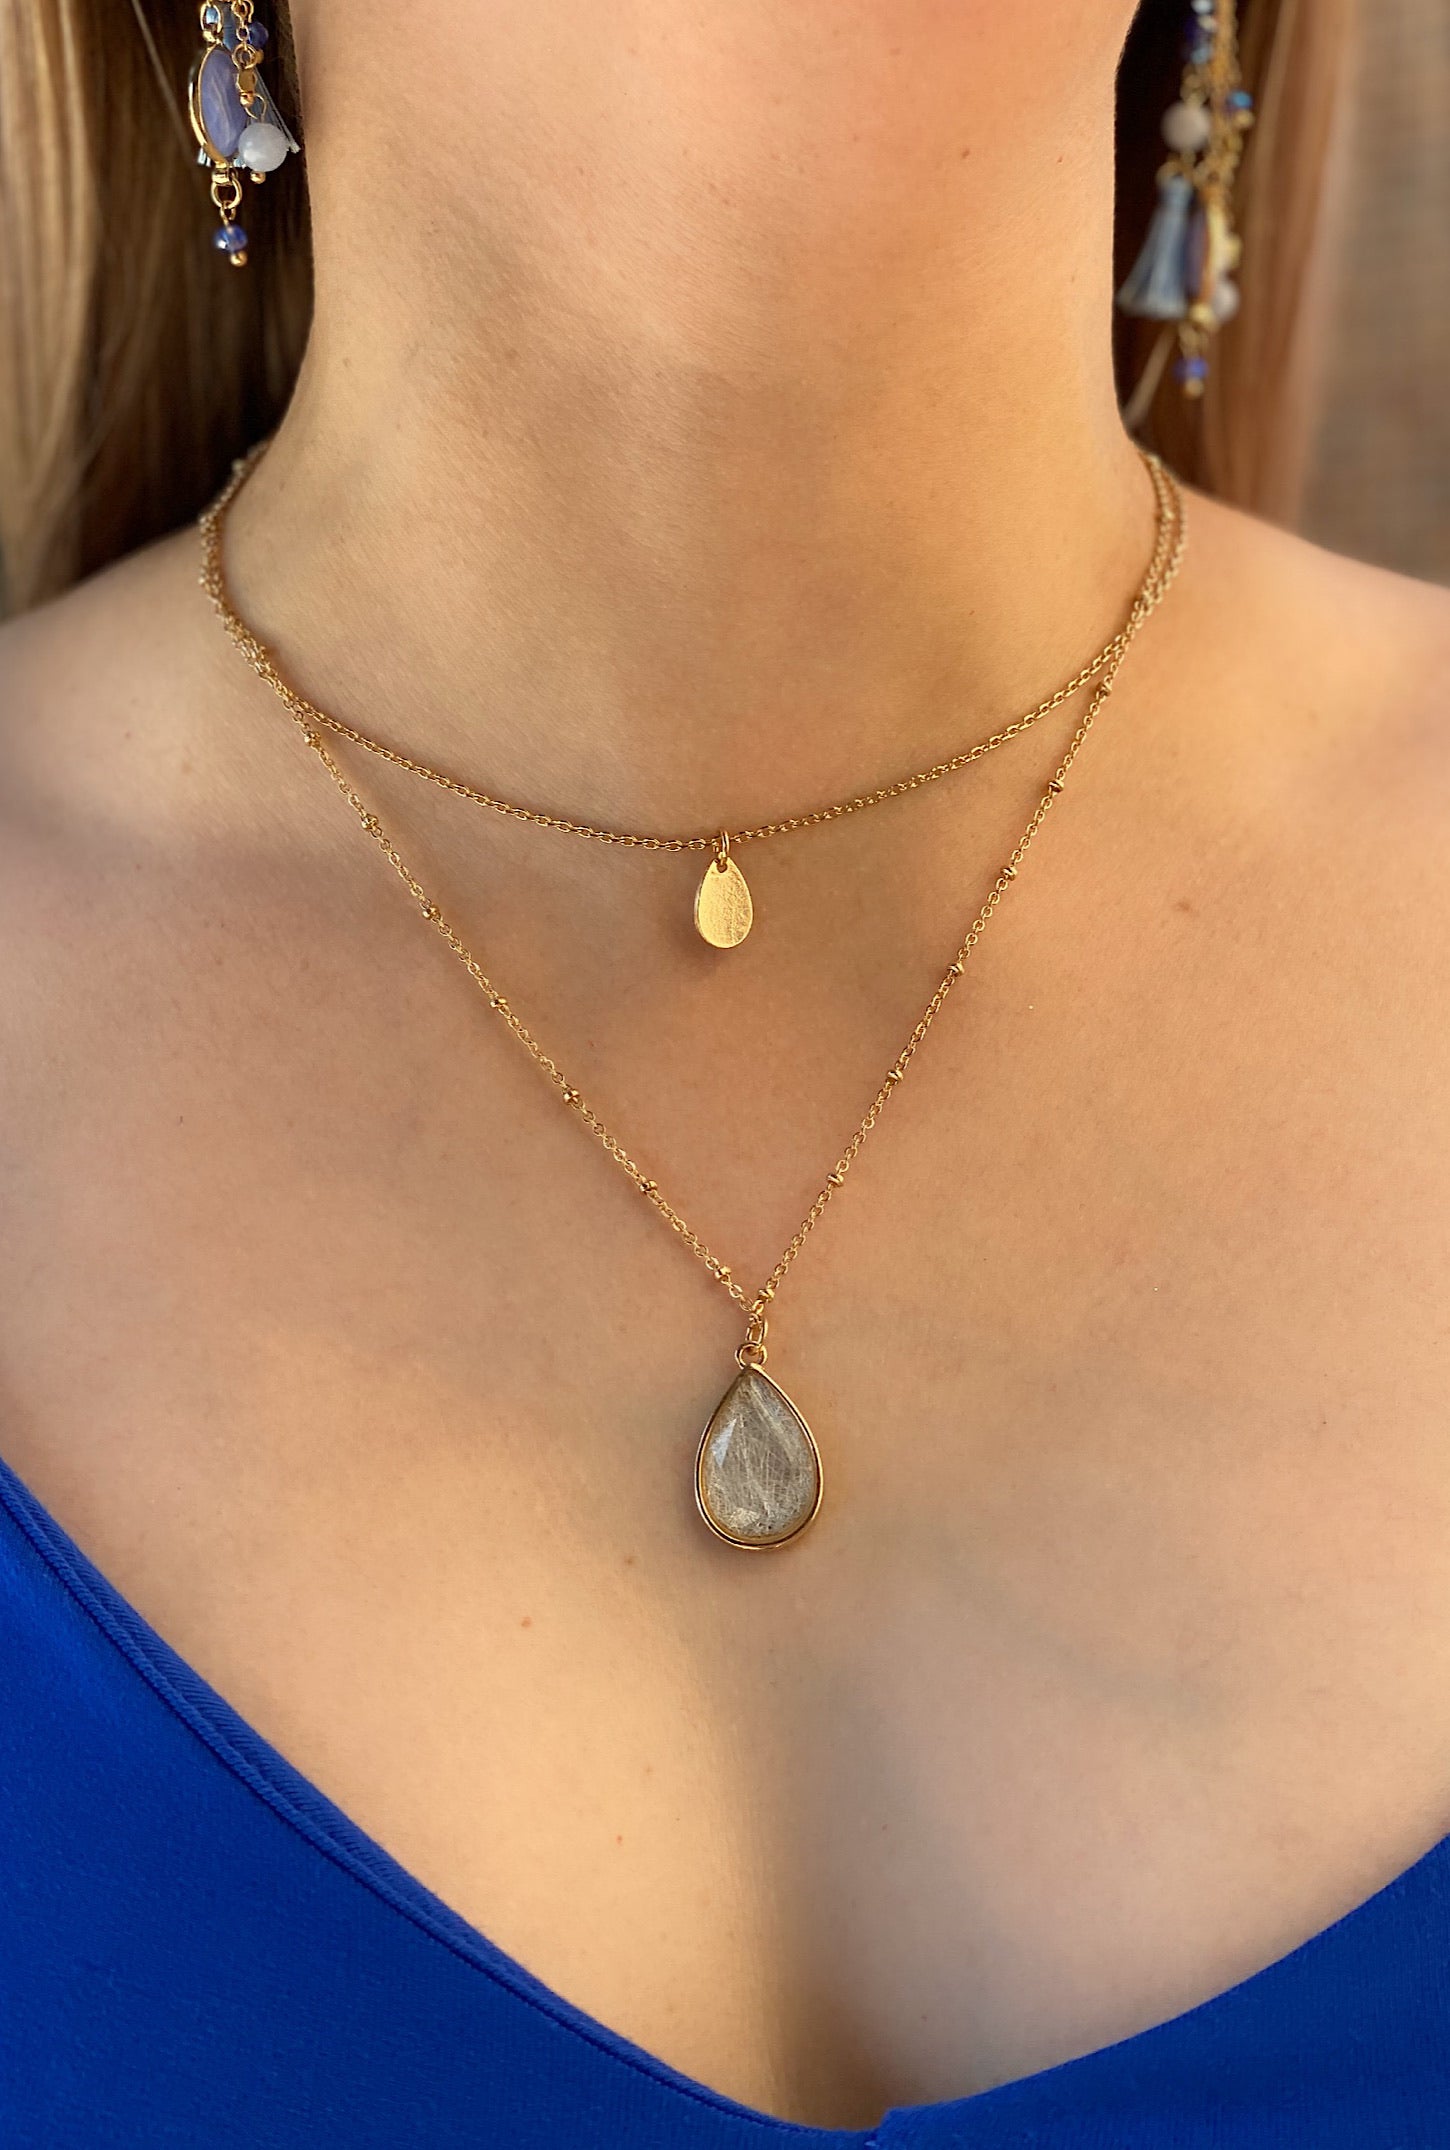 Teardrop Stone Layered Necklace - Bellamie Boutique